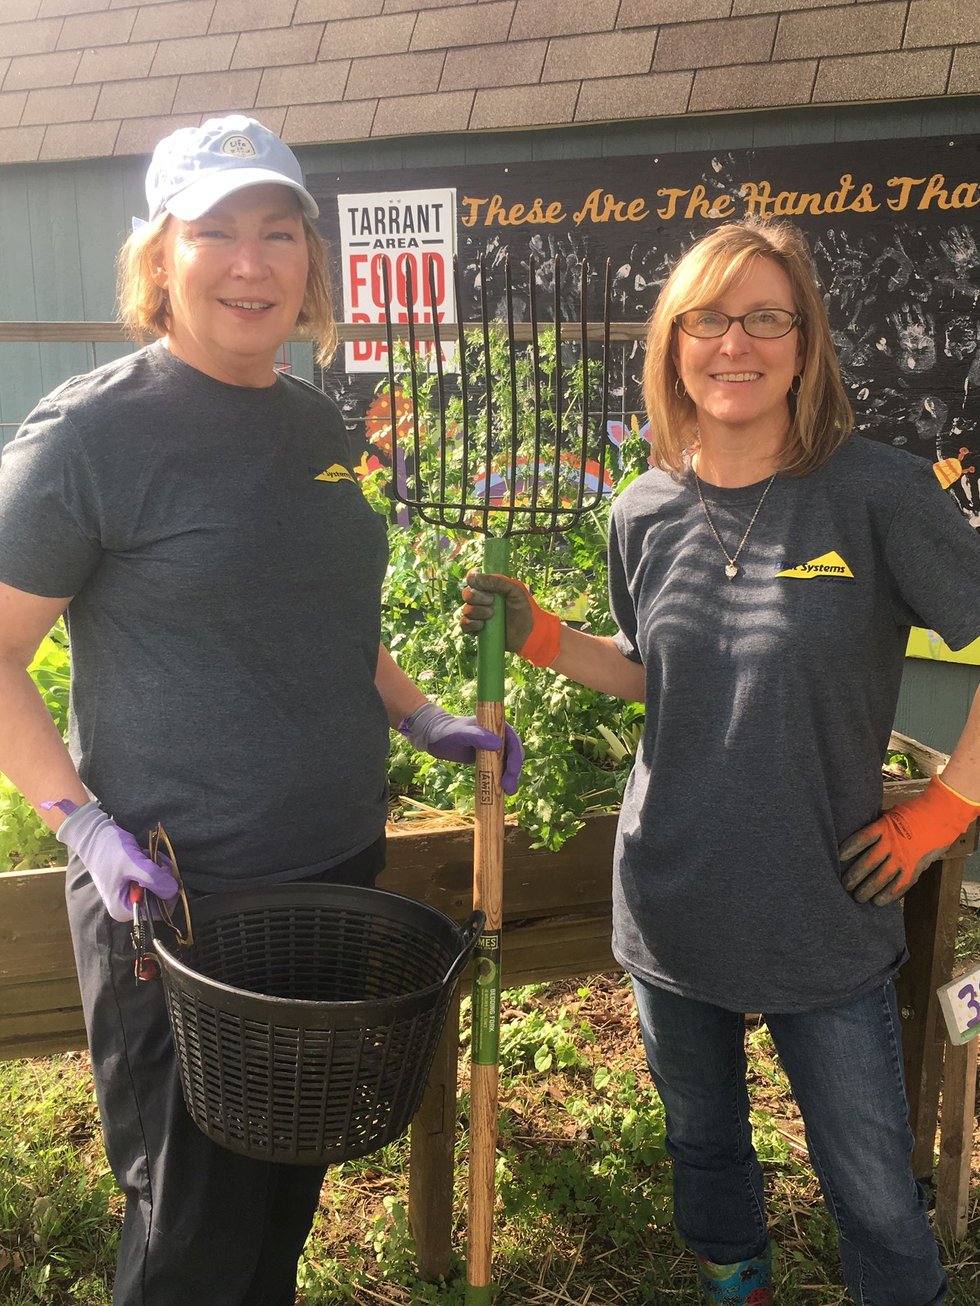 Elbit Systems of America employees Karen Skjolsvik and Zane Smith at Tarrant Area Food Bank Community Garden, 2019